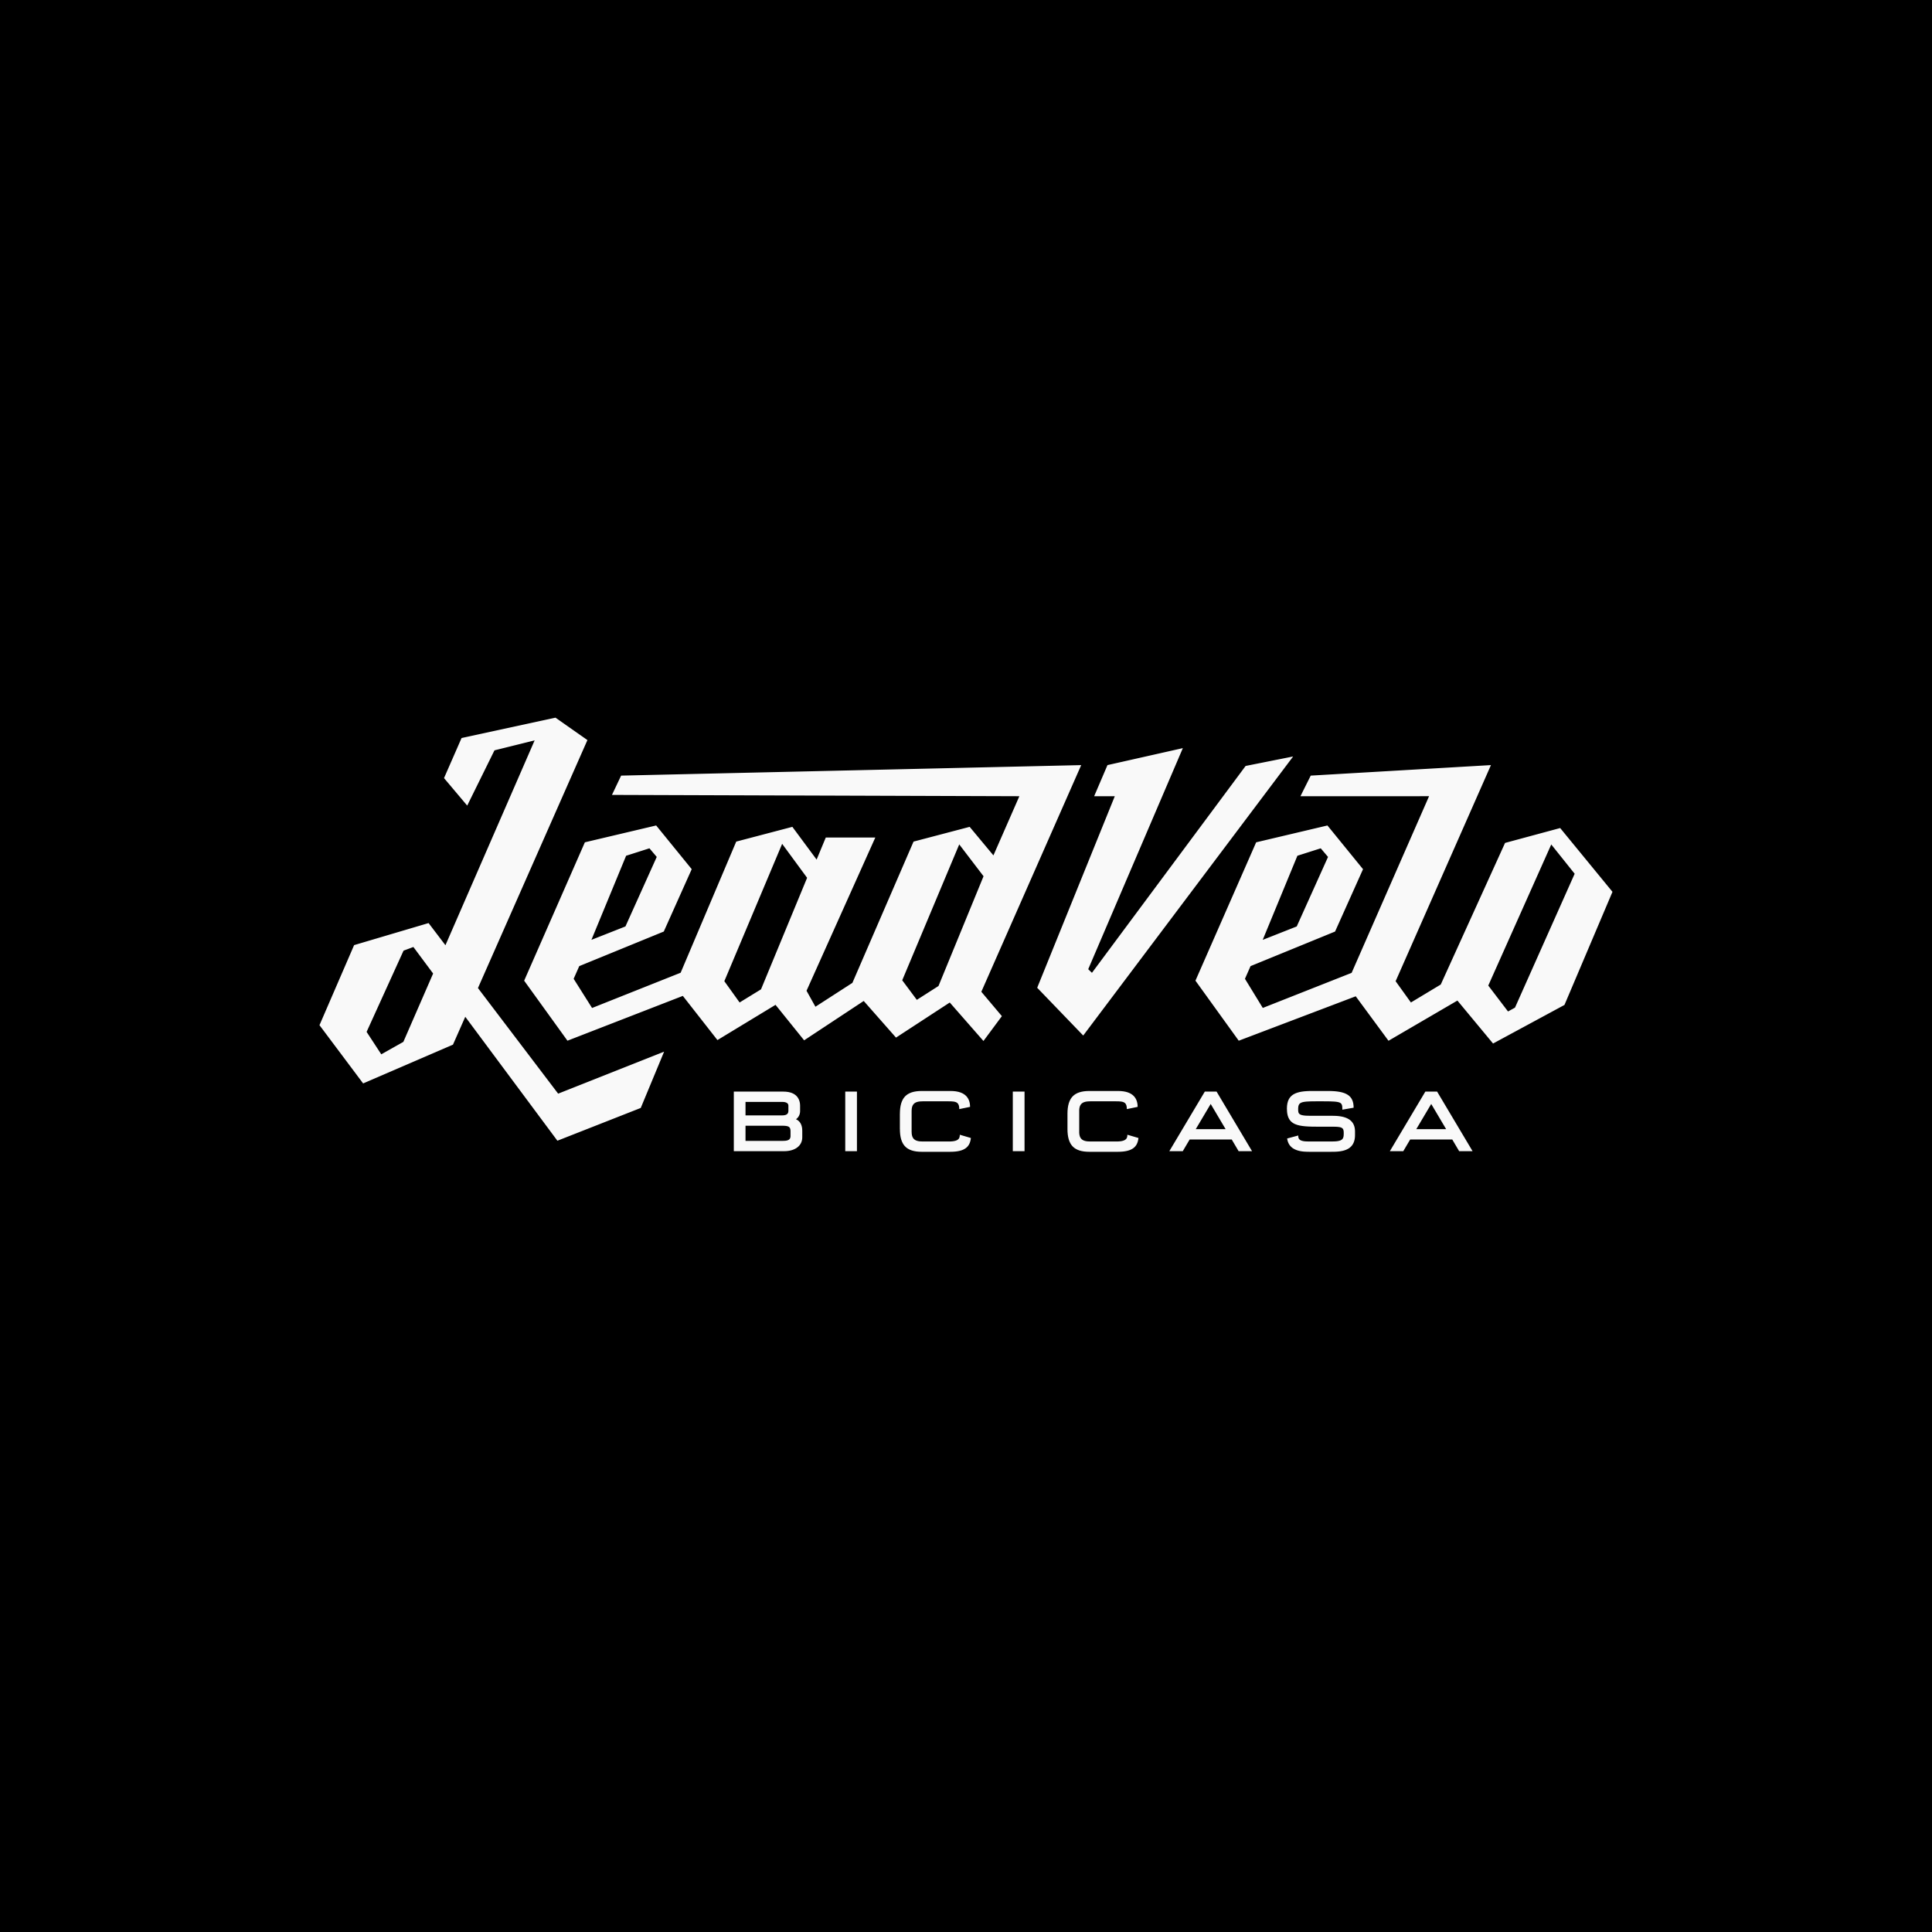 Leadvelo Bicicasa Word Mark by Sunday Lounge